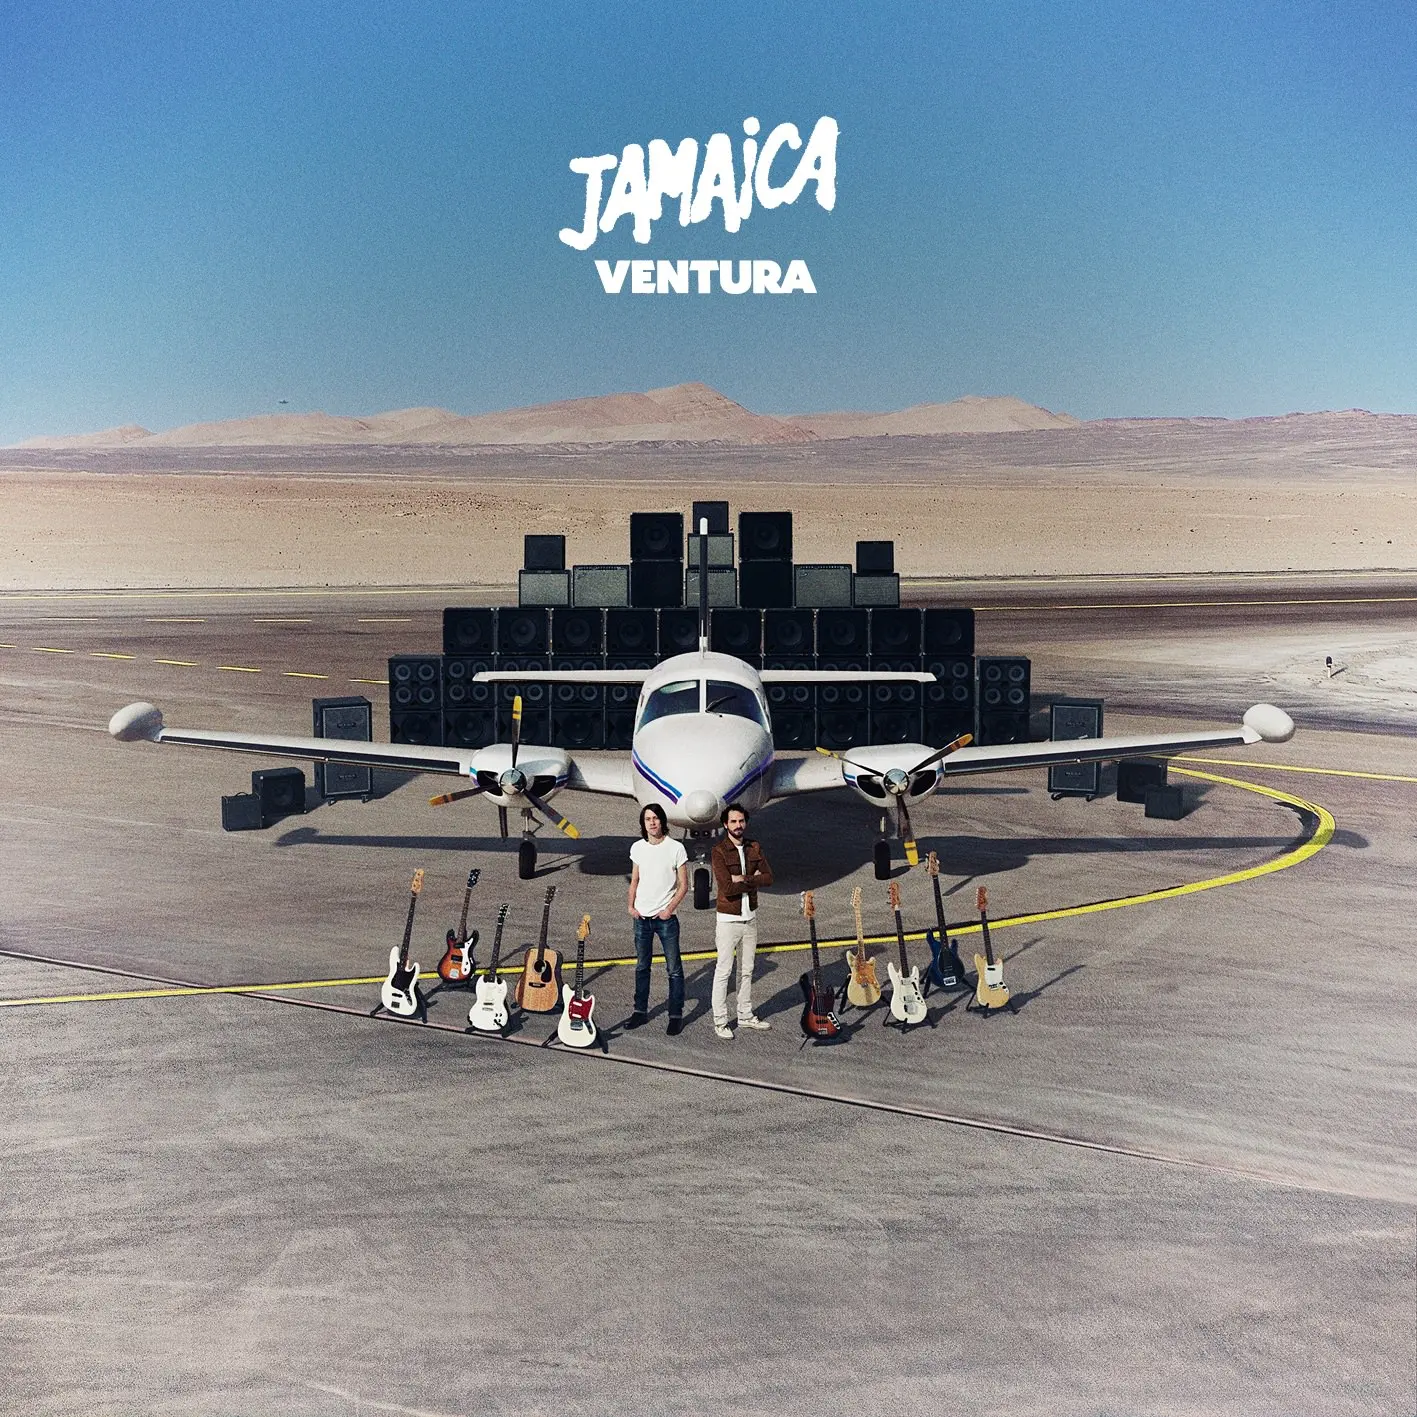 Exclu : “Ventura”, le nouvel album de Jamaica en écoute